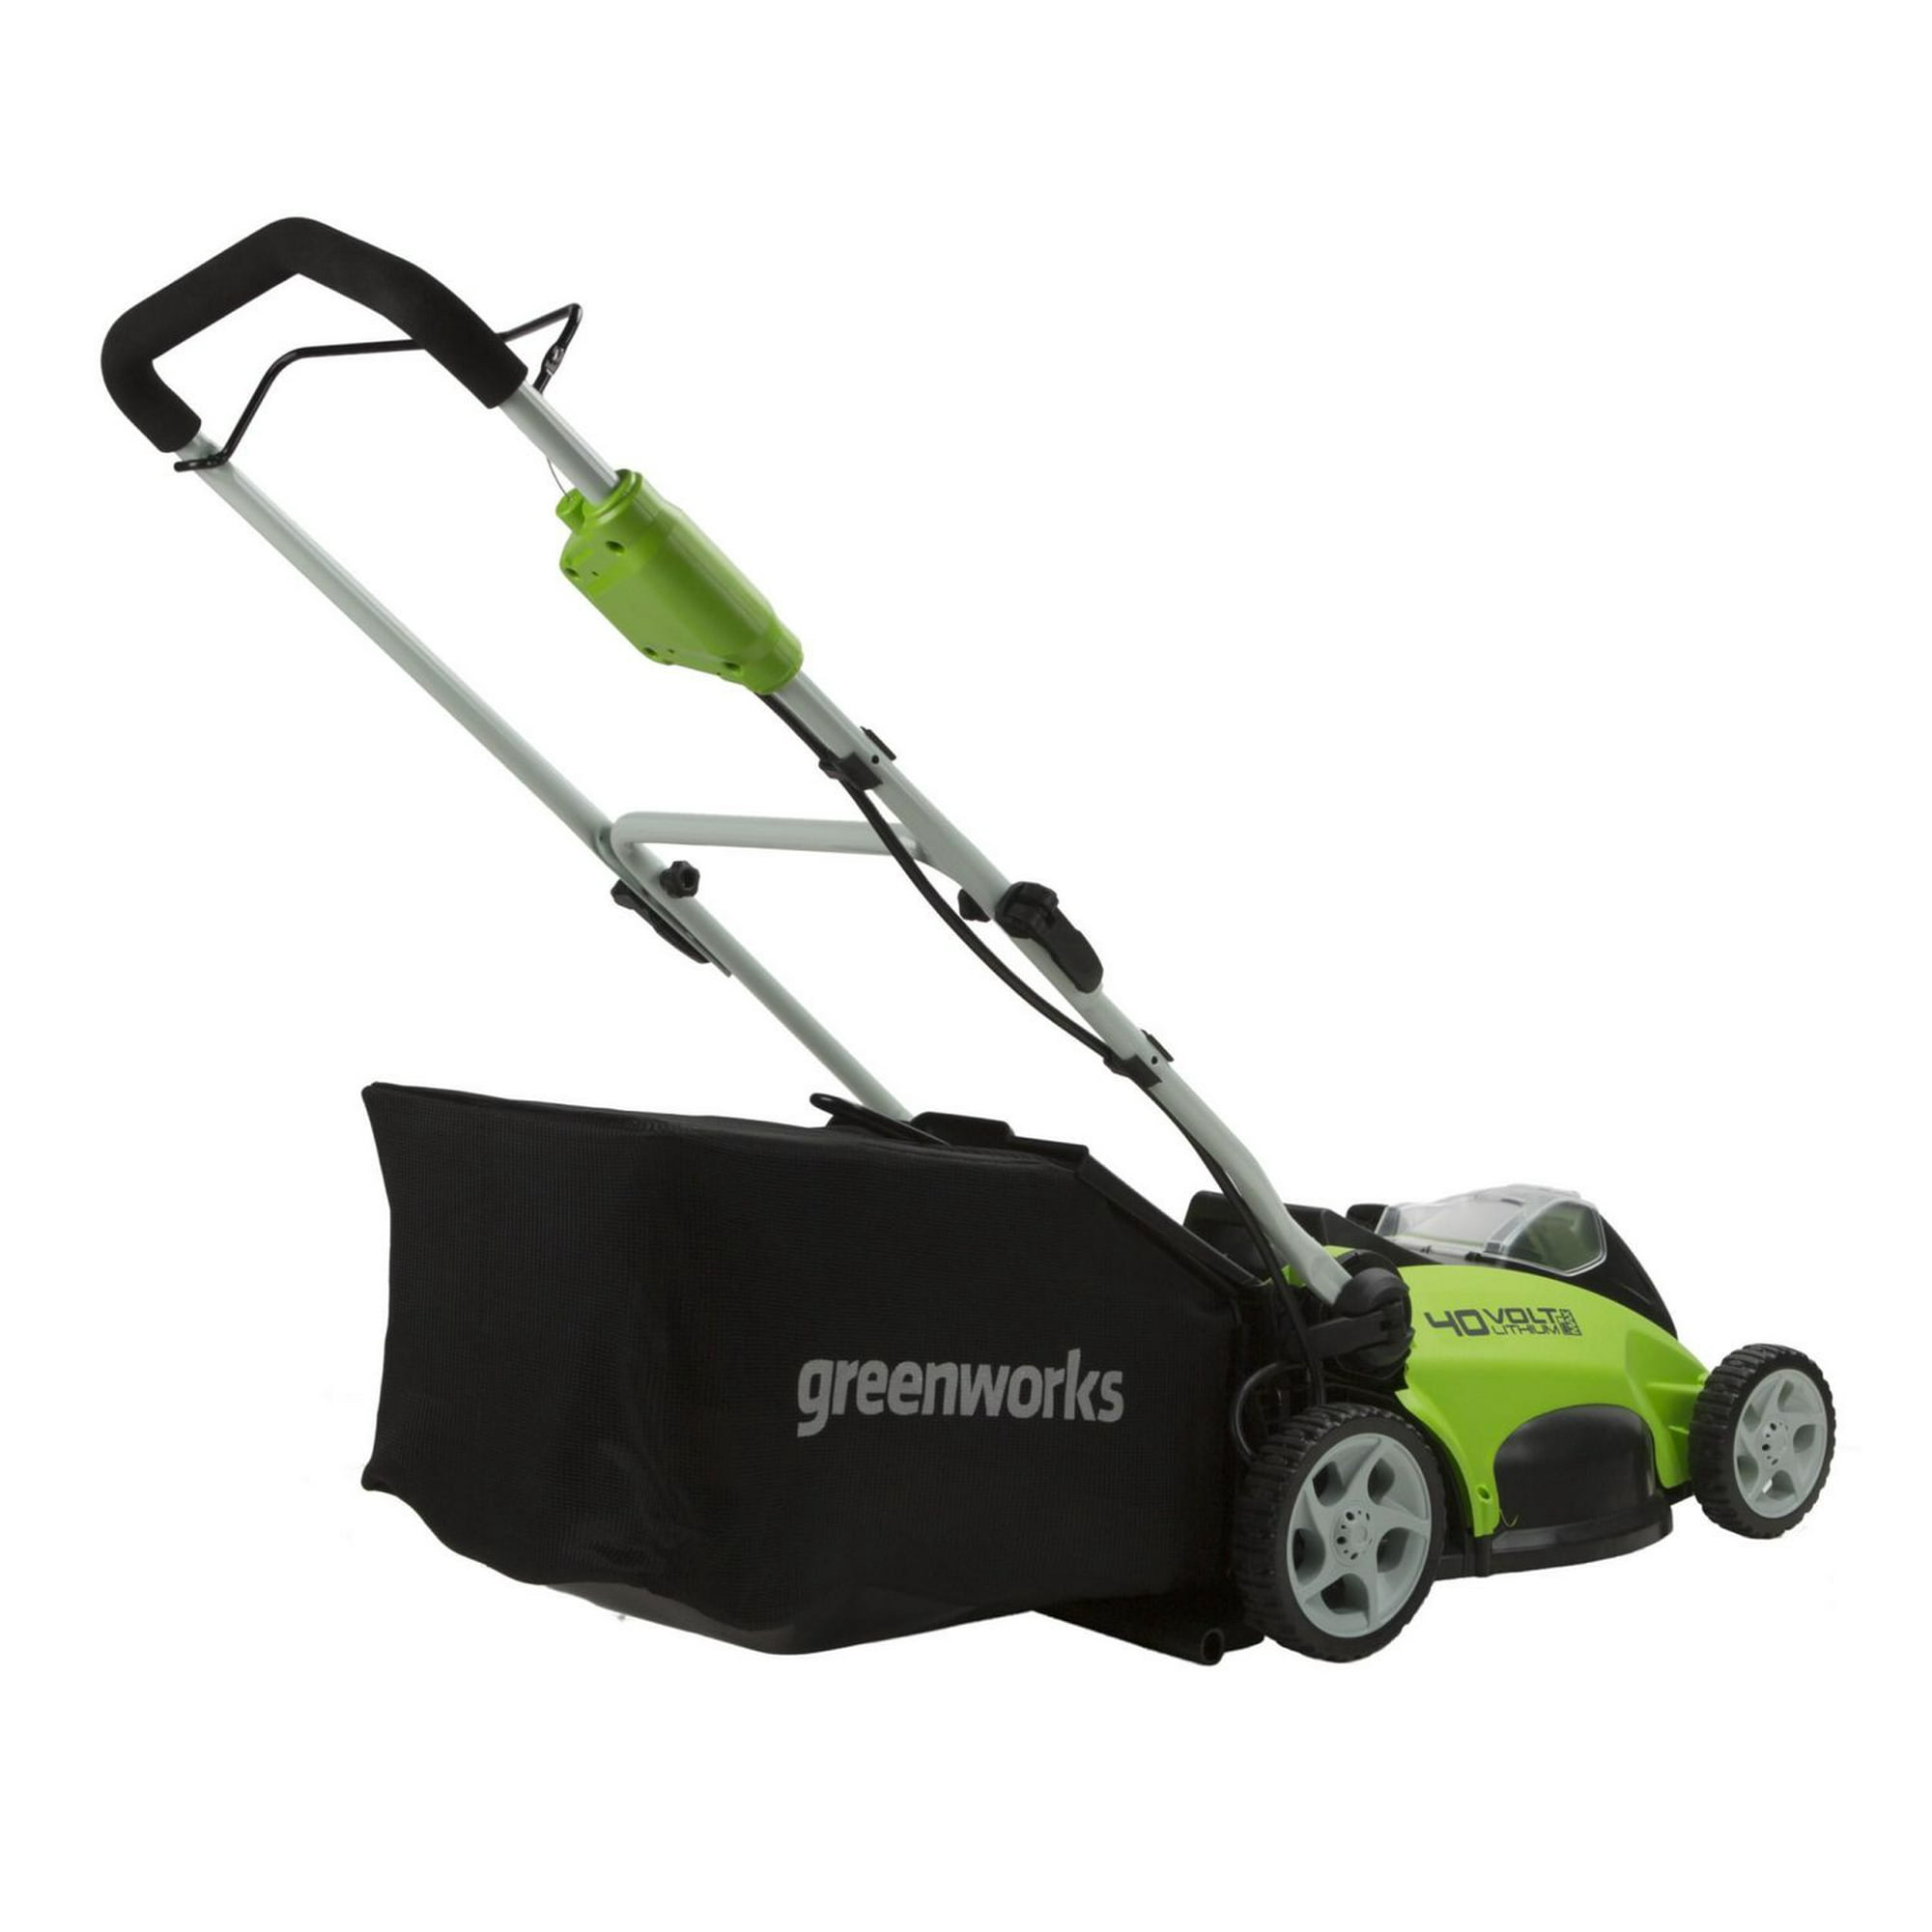 Greenworks 40v 16 2in1 Cordless Lawnmower